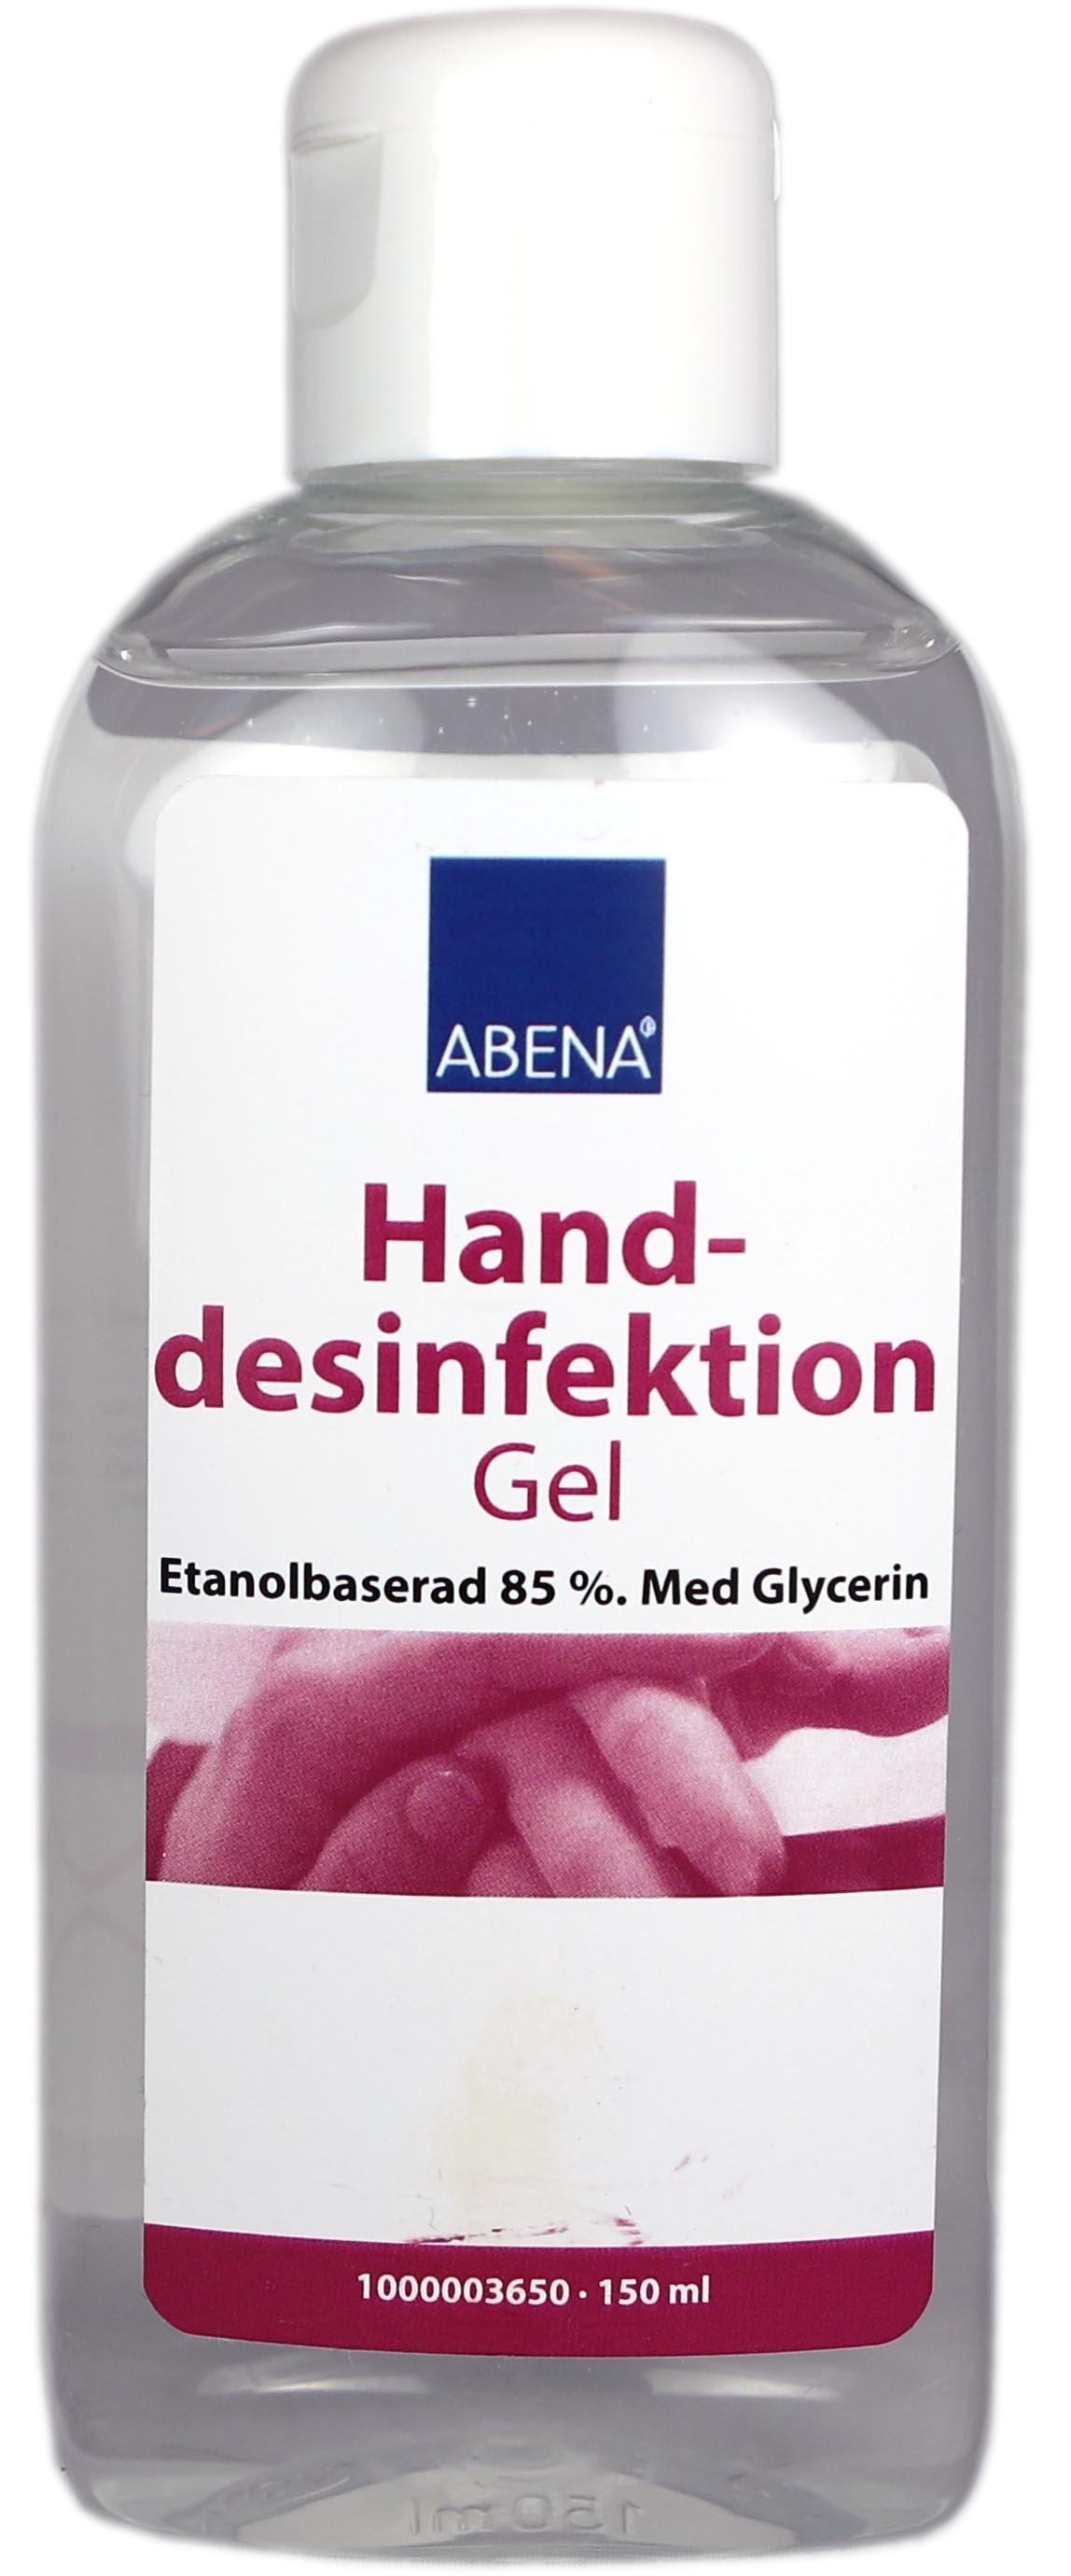 Handdesinfektion Abena Gel 85% 150ml